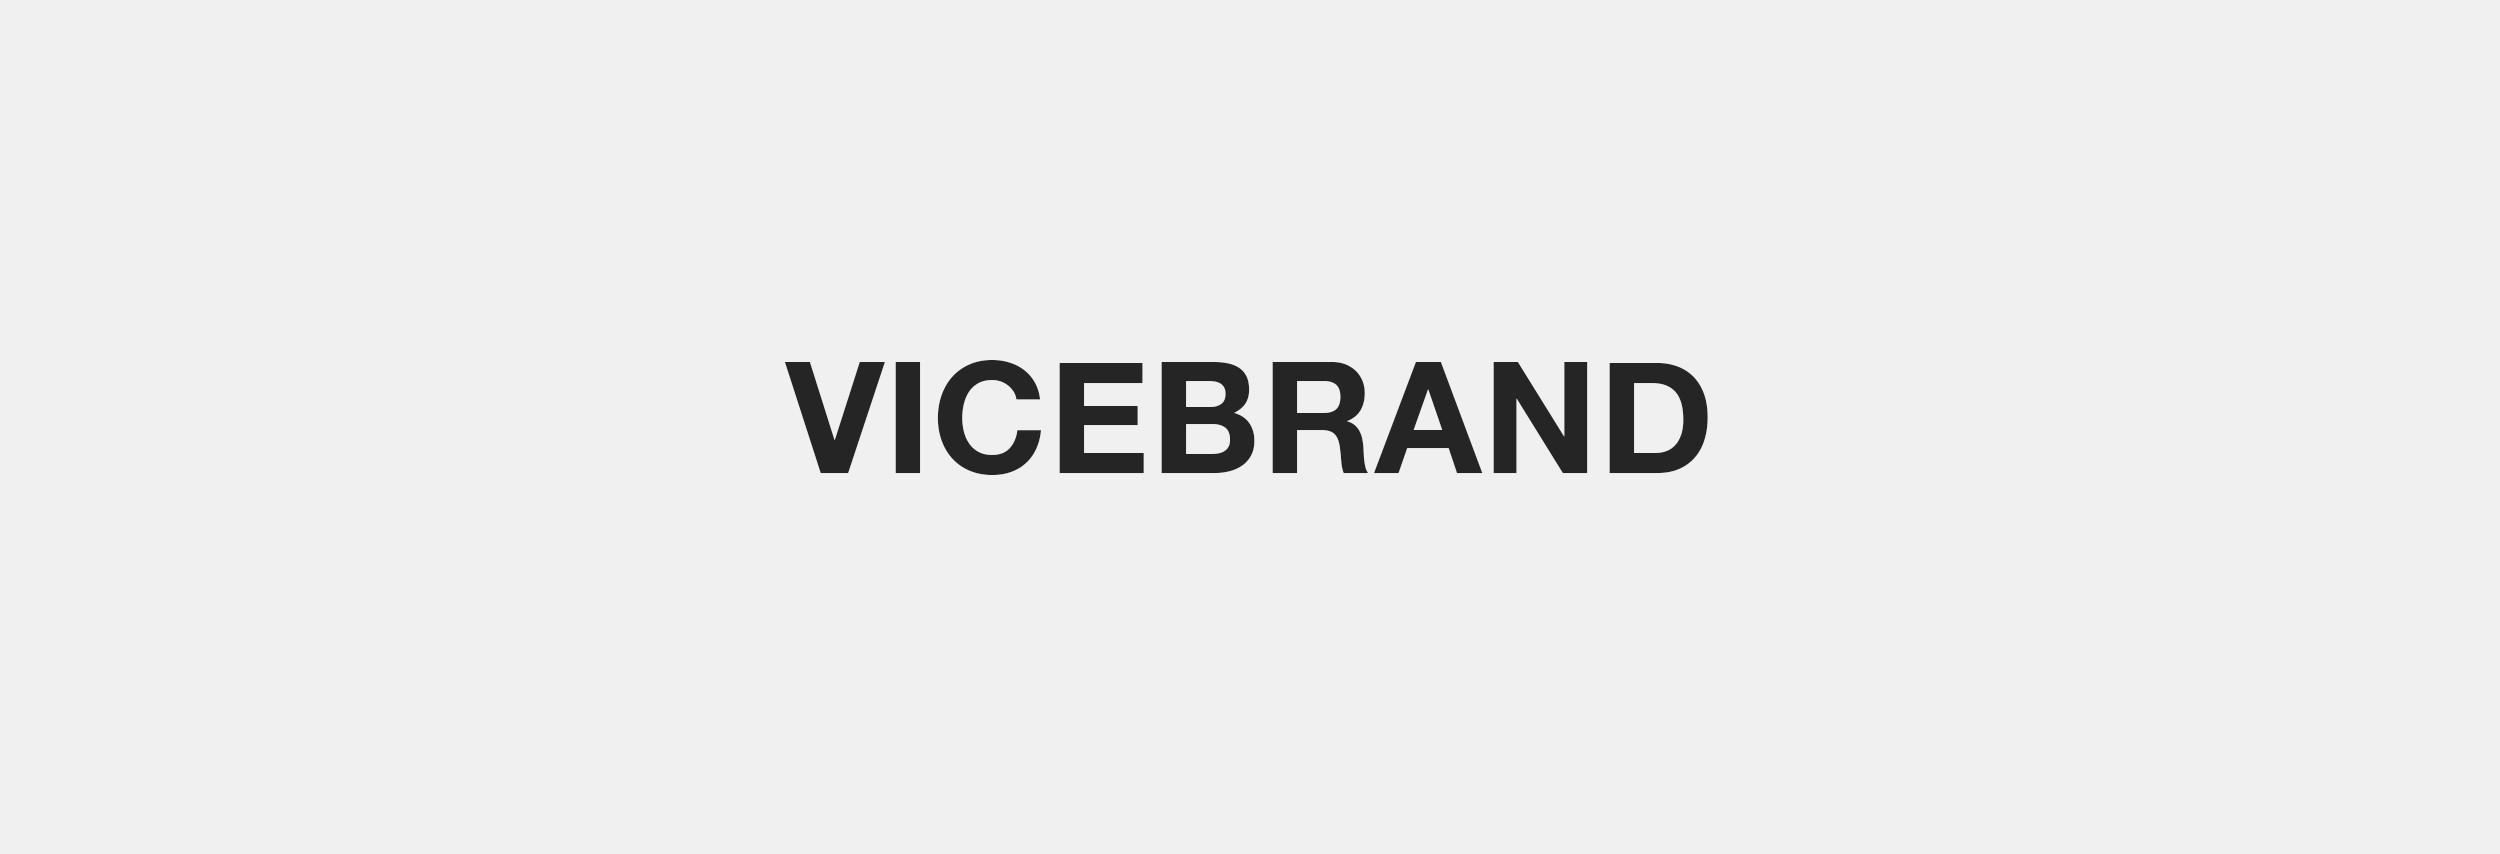 Viceland Logo - Viceland Brand Identity - Graphic Language - Medium